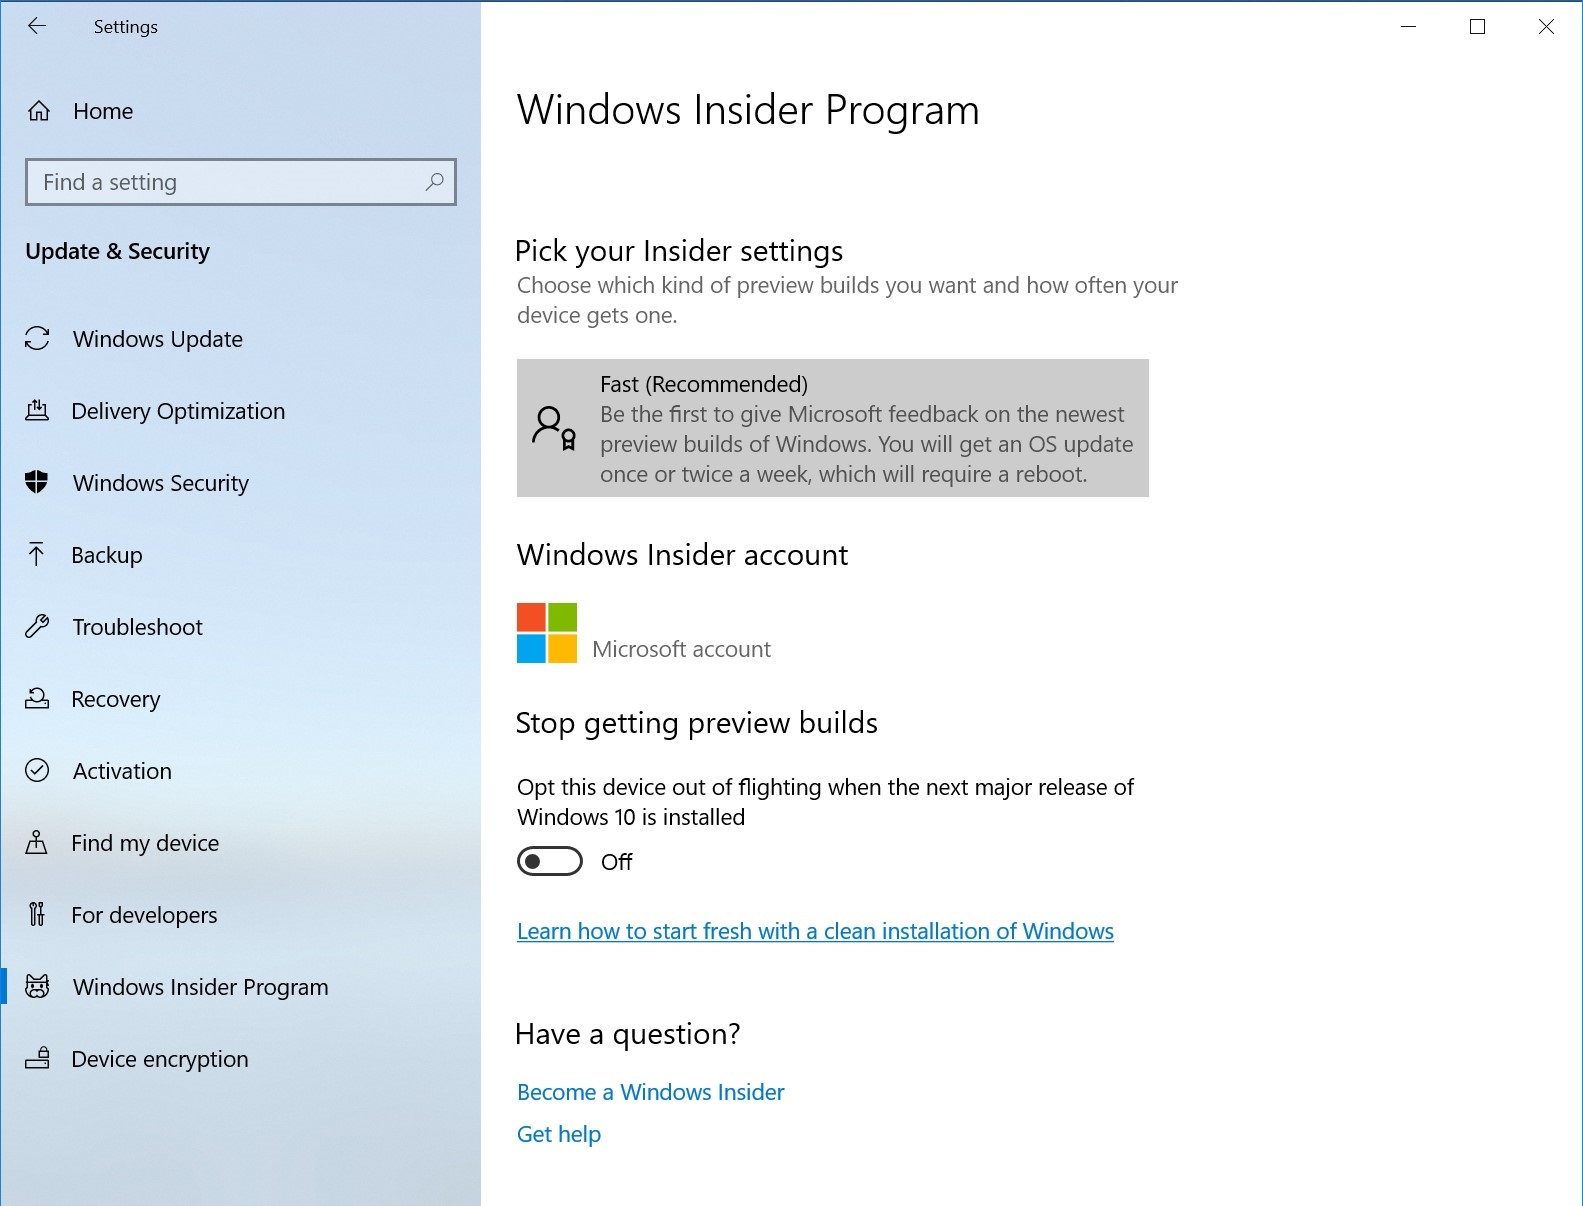 New Windows 10 Insider Preview Fast Build 18317 (19H1) - Jan. 16 ba12422c13676fde90b6cd646c1026d8.jpg